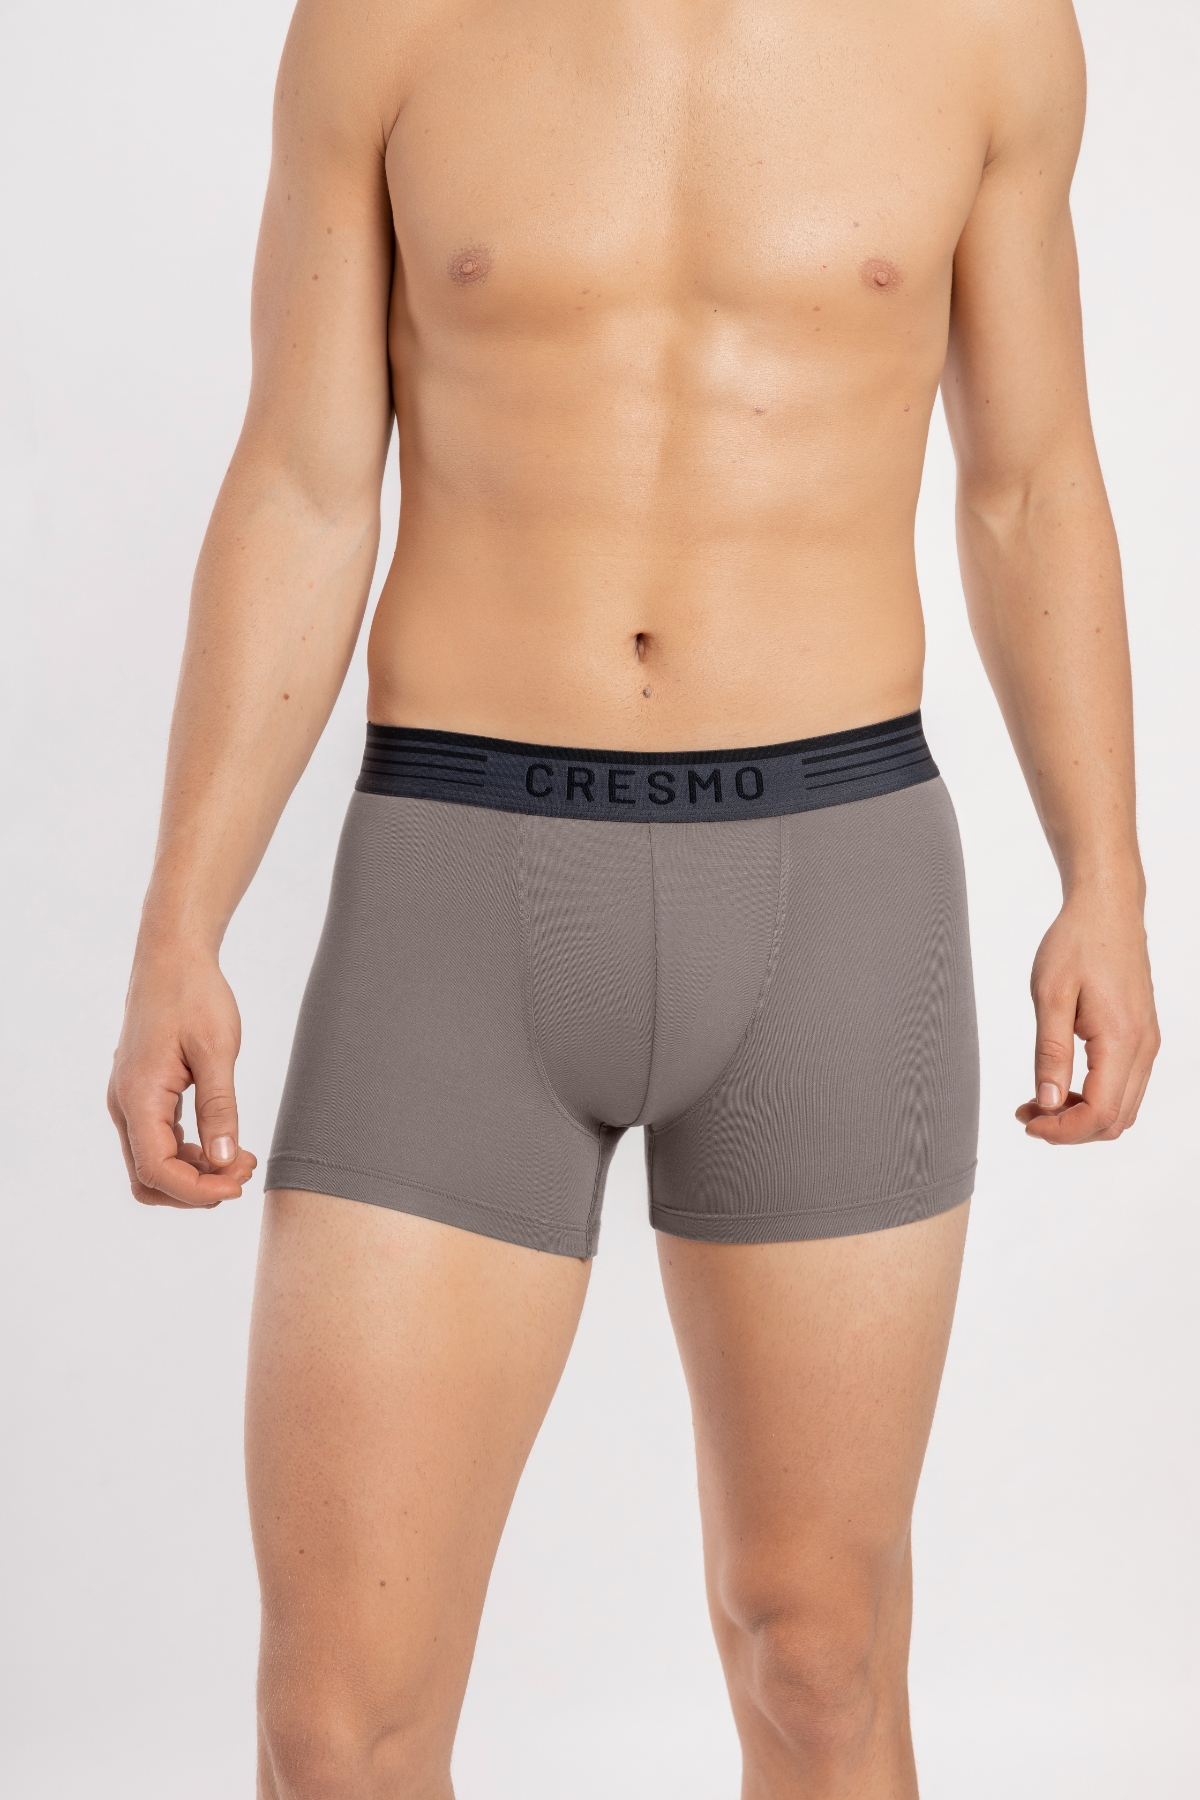 CRESMO Men's Anti-Microbial Micro Modal Underwear Breathable Ultra